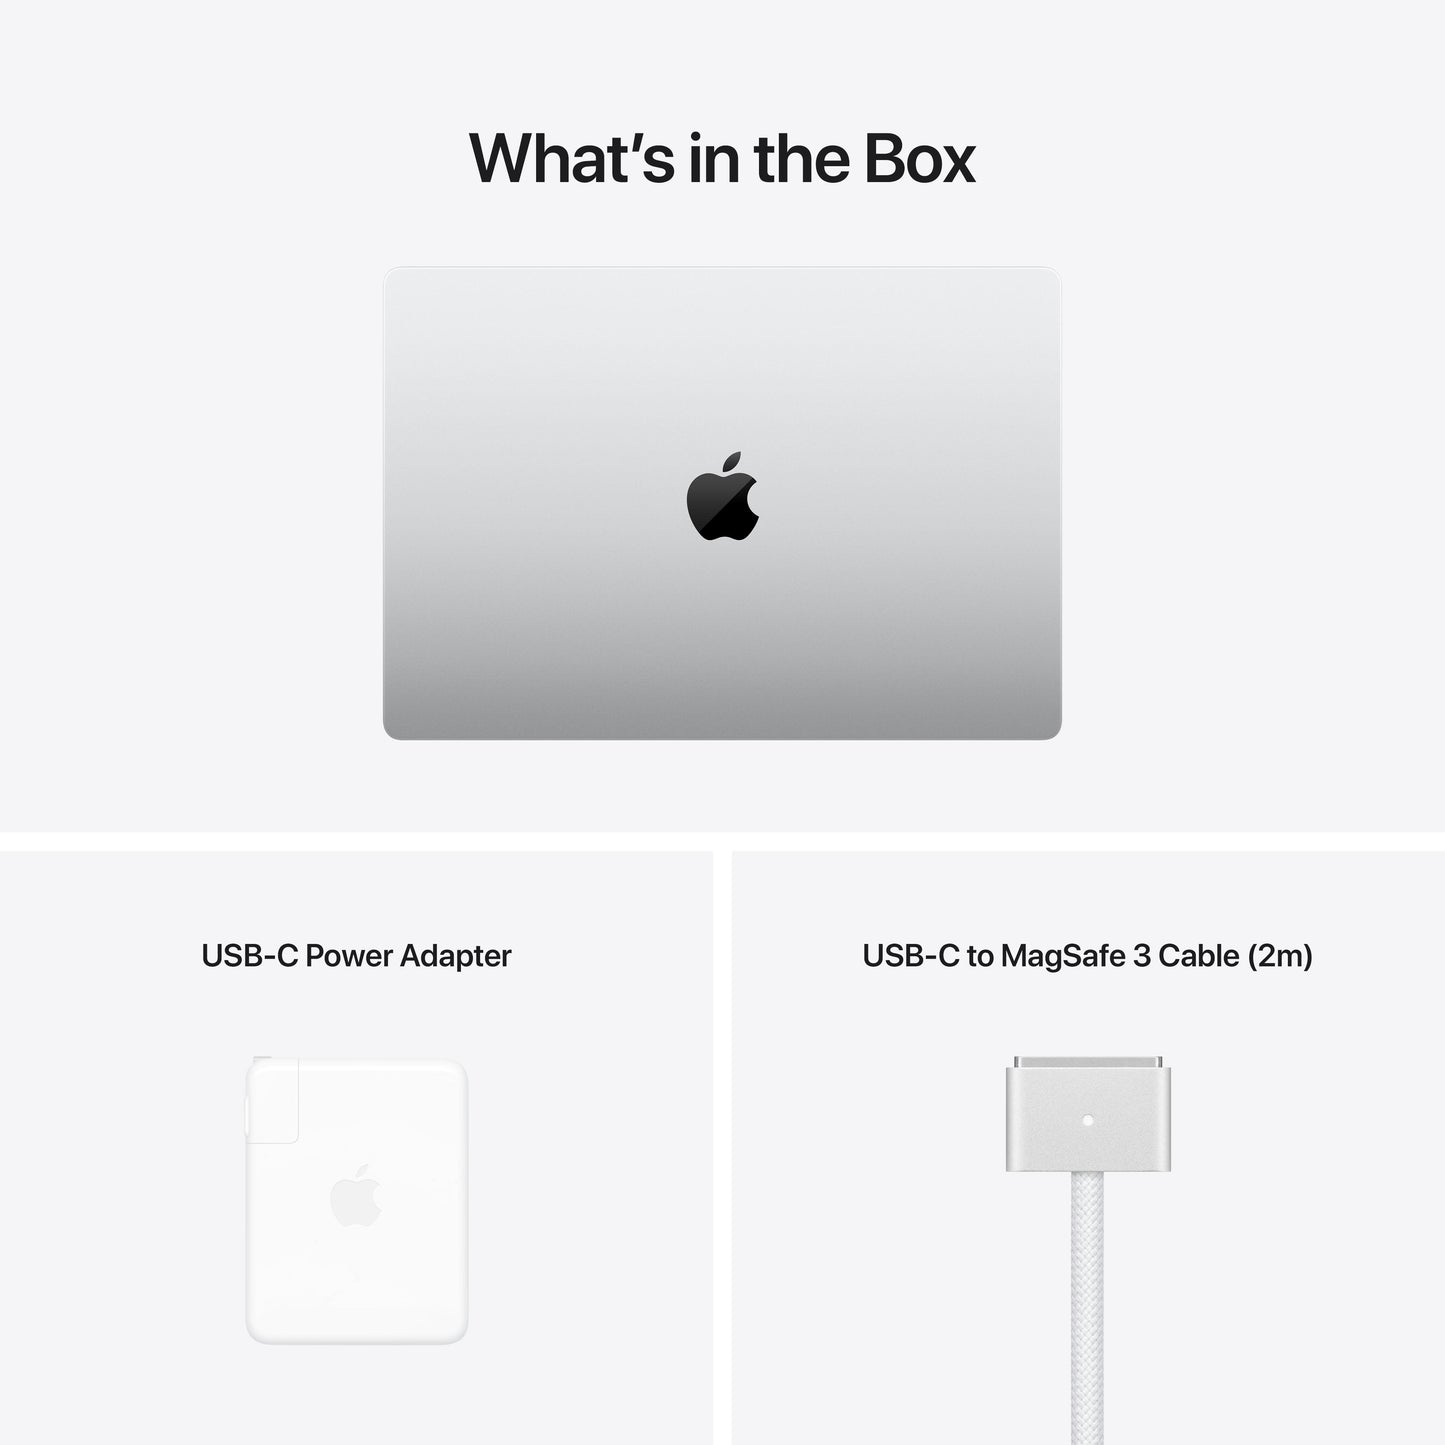 16-inch MacBook Pro: Apple M1 Pro chip with 10_core CPU and 16_core GPU, 512GB SSD - Silver